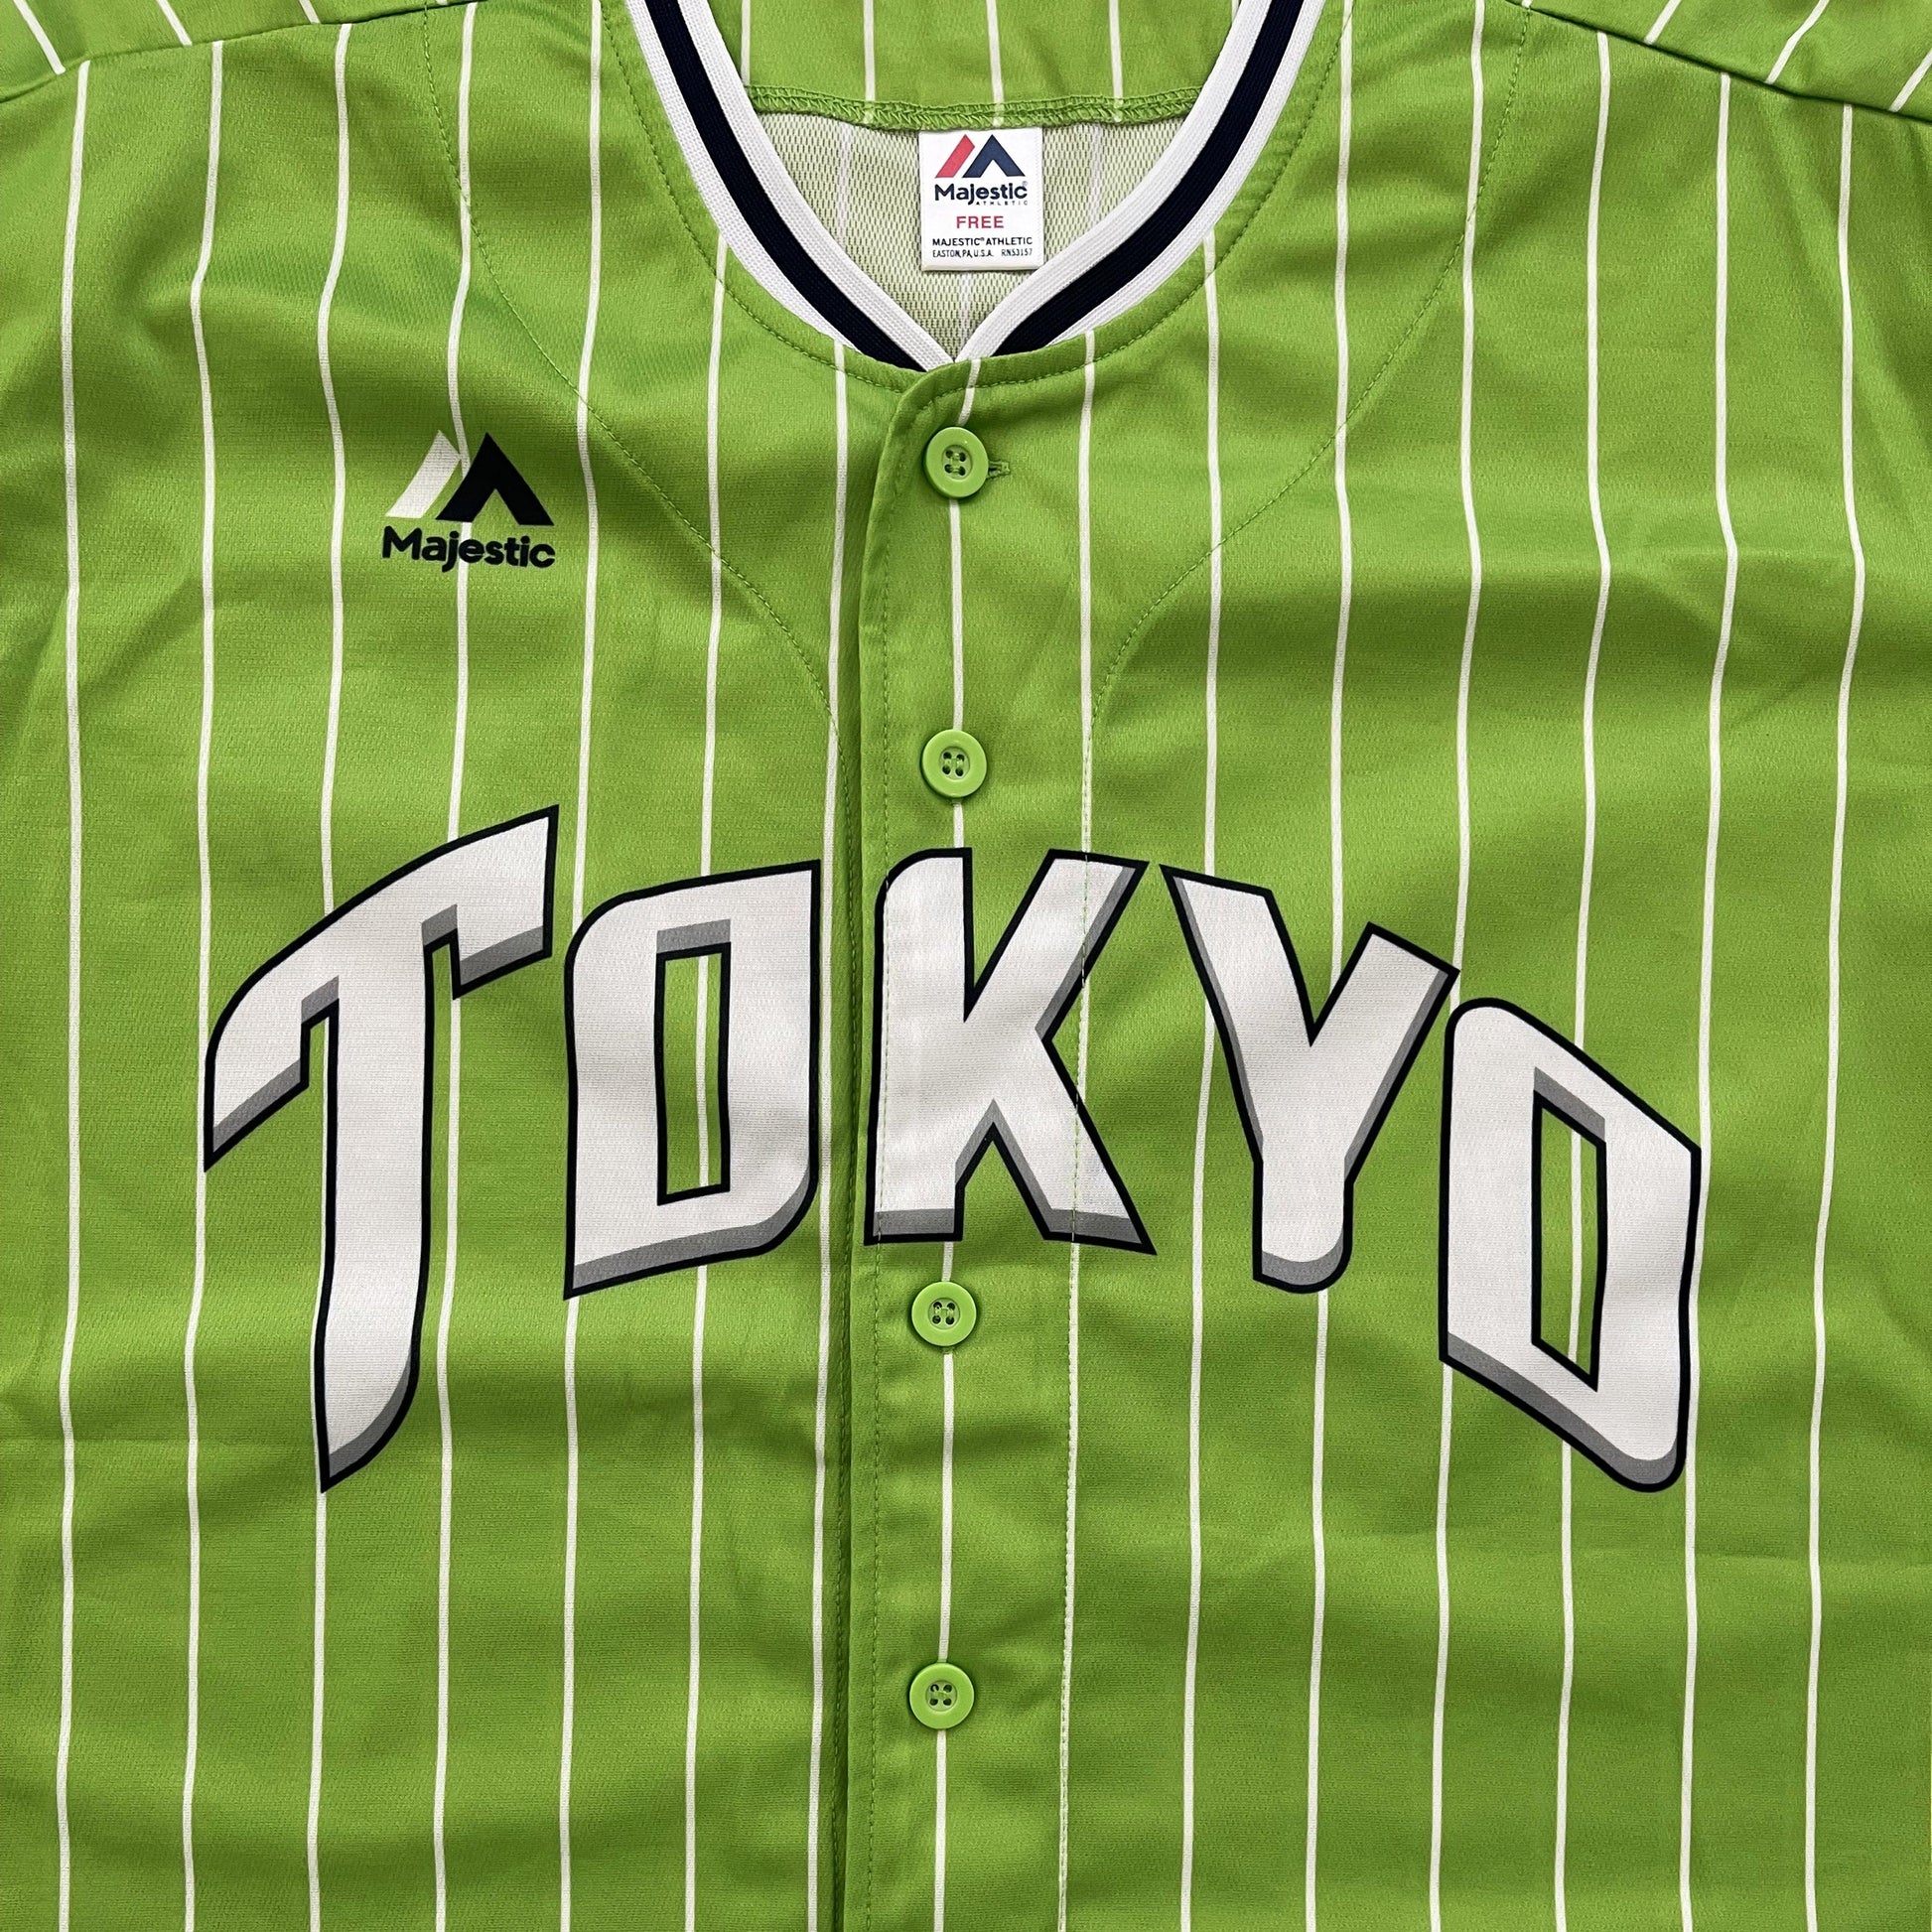 Japanese Baseball Jersey Tokyo Swallows - L - Known Source